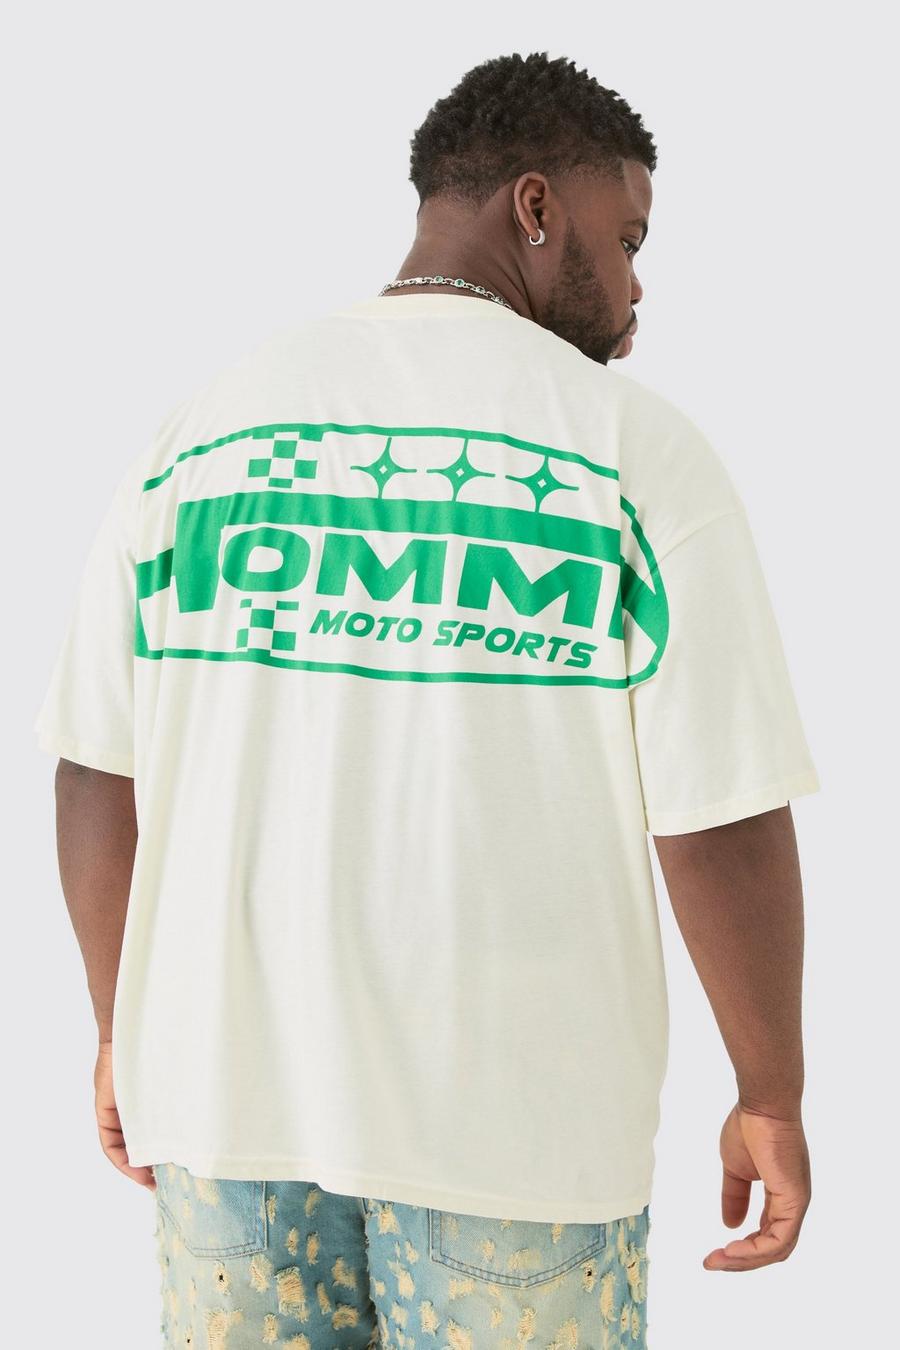 Plus Homme Moto Sports Graphic T-shirt In Ecru